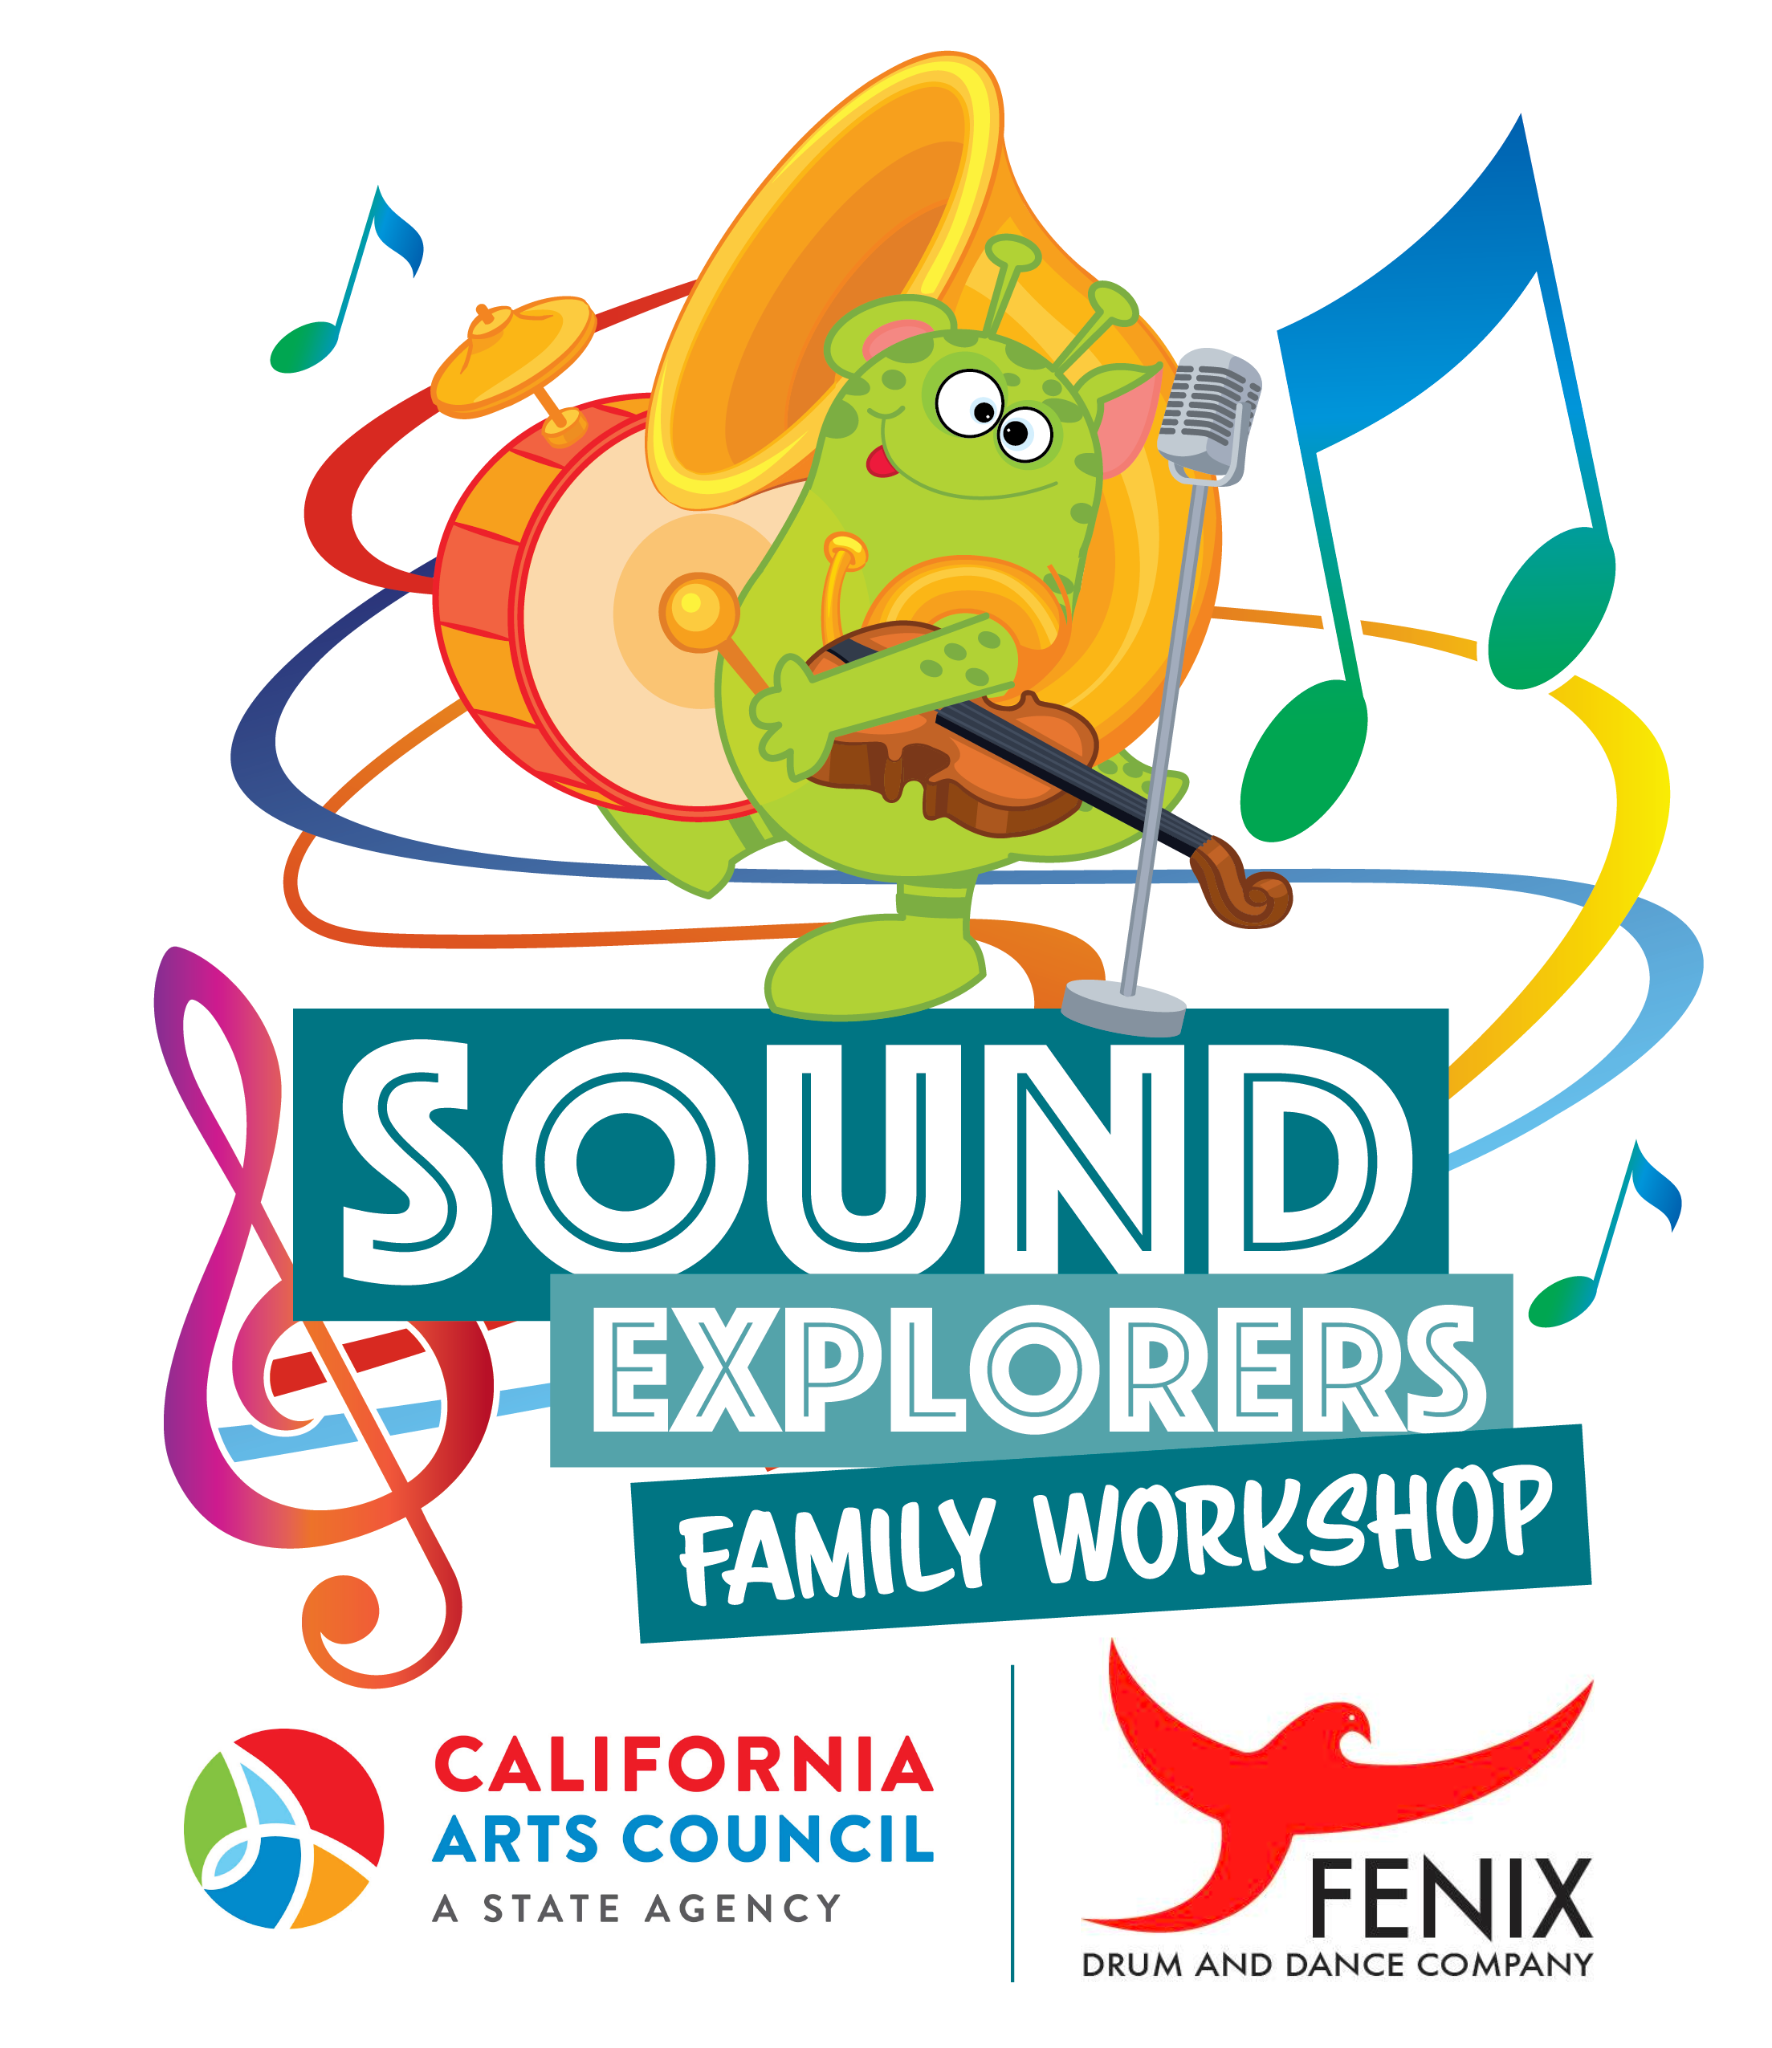 Sound Explorers Family Workshop – Fenix Drum and Dance Company